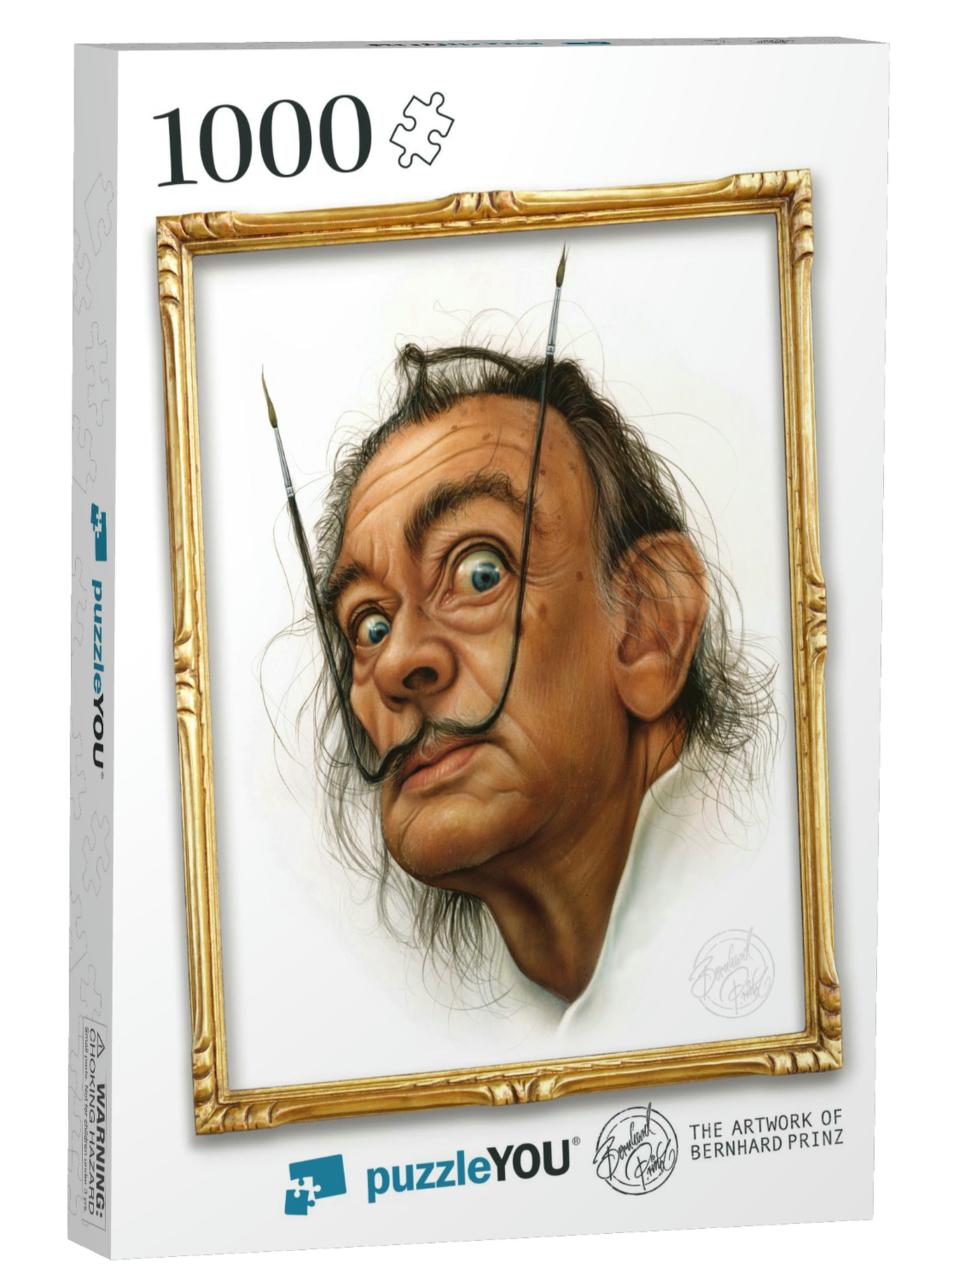 Salvador Dali Portrait Jigsaw Puzzle with 1000 pieces